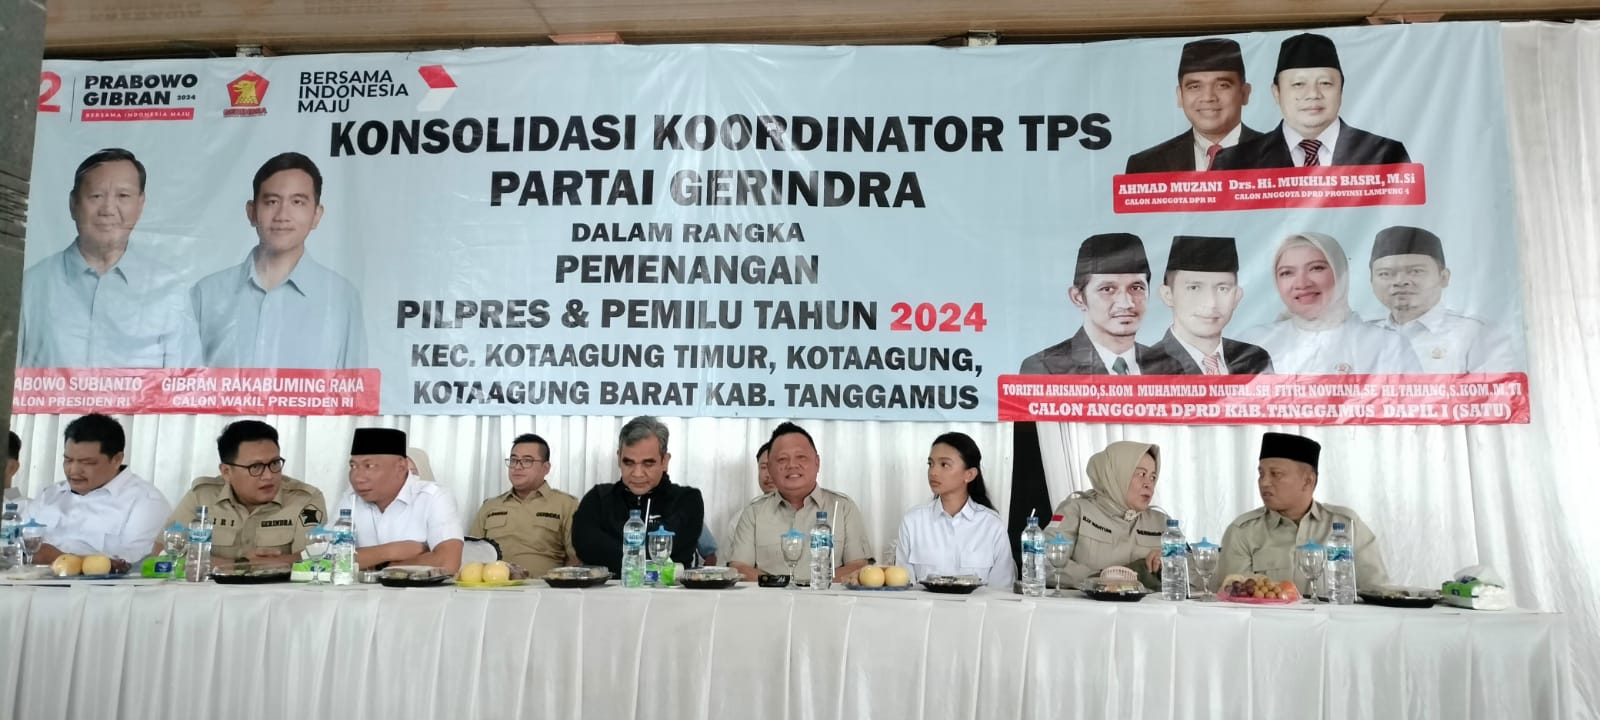 DPC Partai Gerindra Tanggamus Gelar Konsolidasi Koordinator TPS